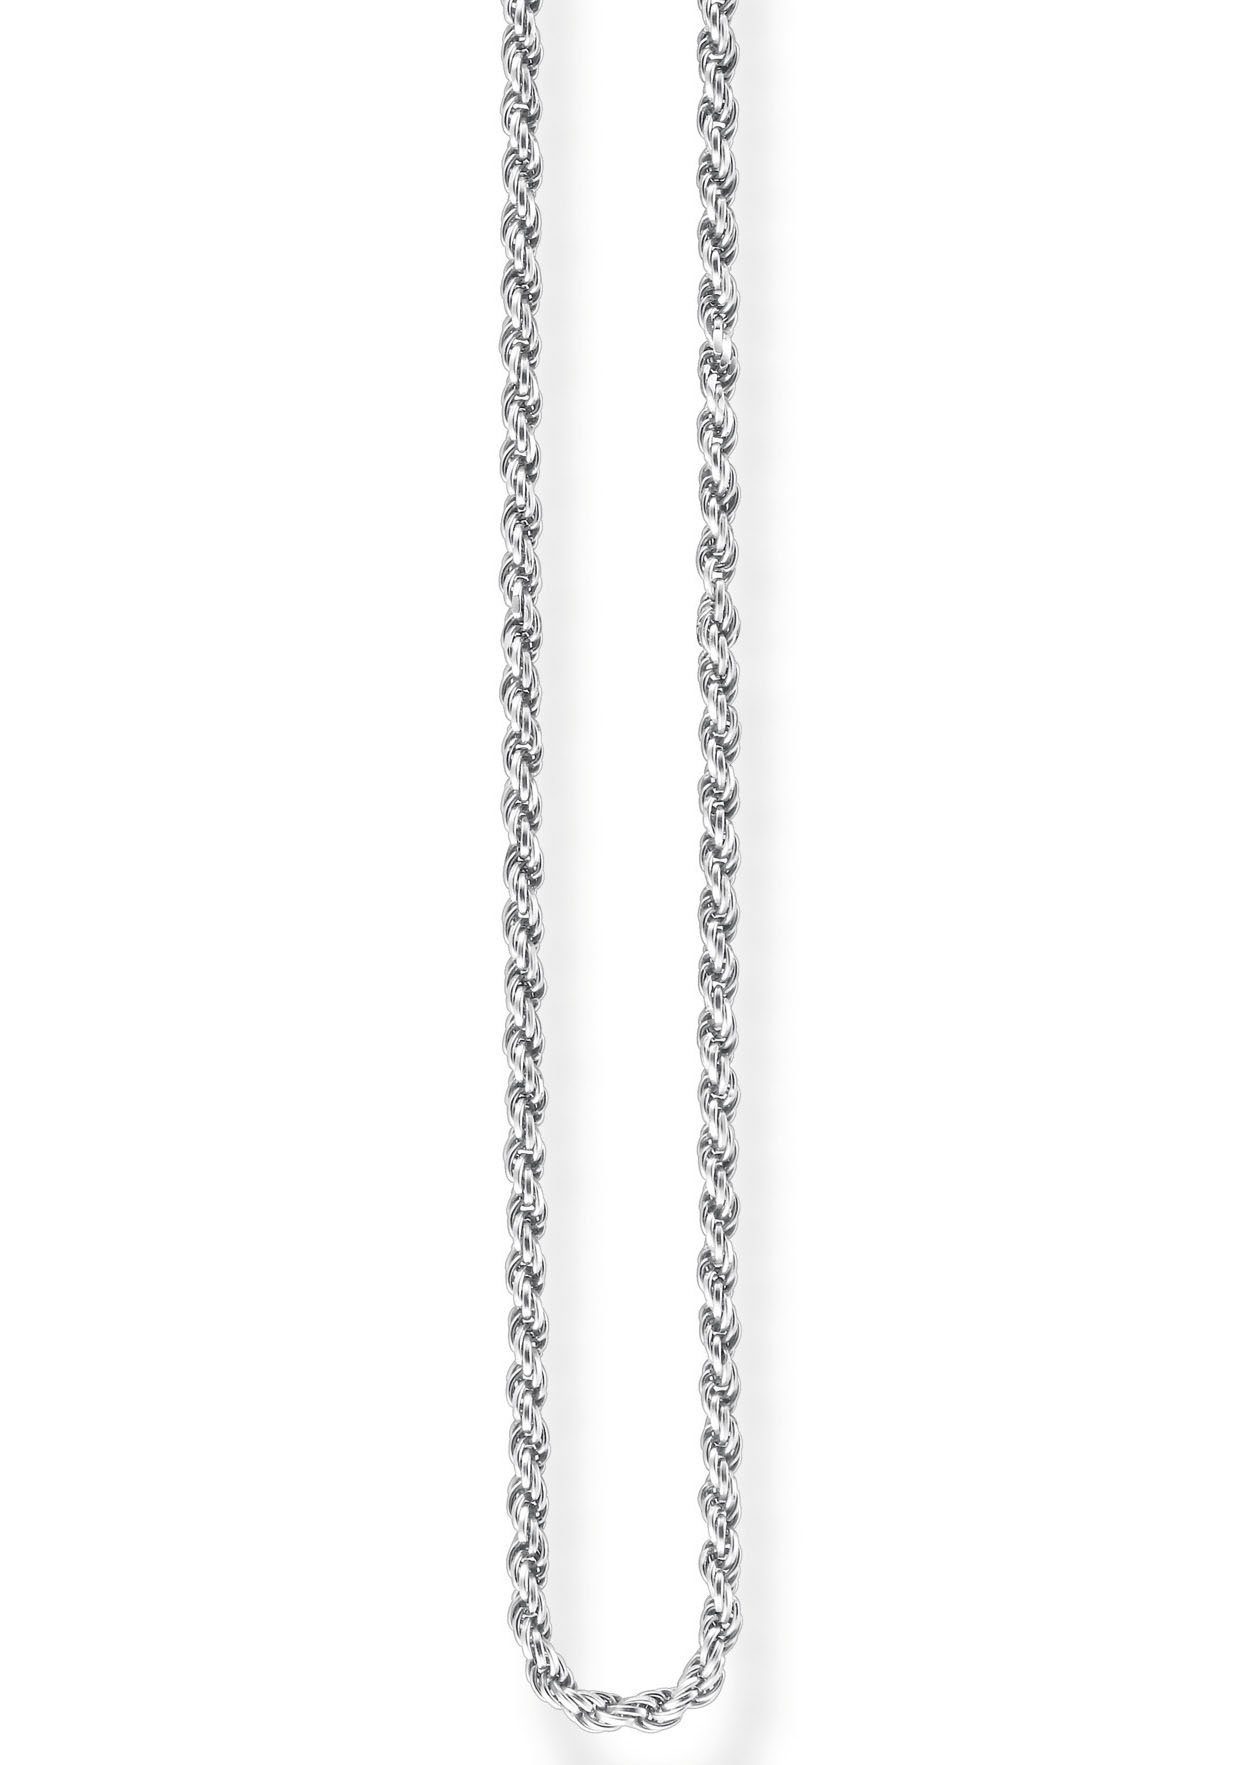 THOMAS SABO Silberkette Kordelkette, KE1348-001-12-L40, KE1348-001-12-L50,  In verschiedenen Längen erhältlich | Silberketten